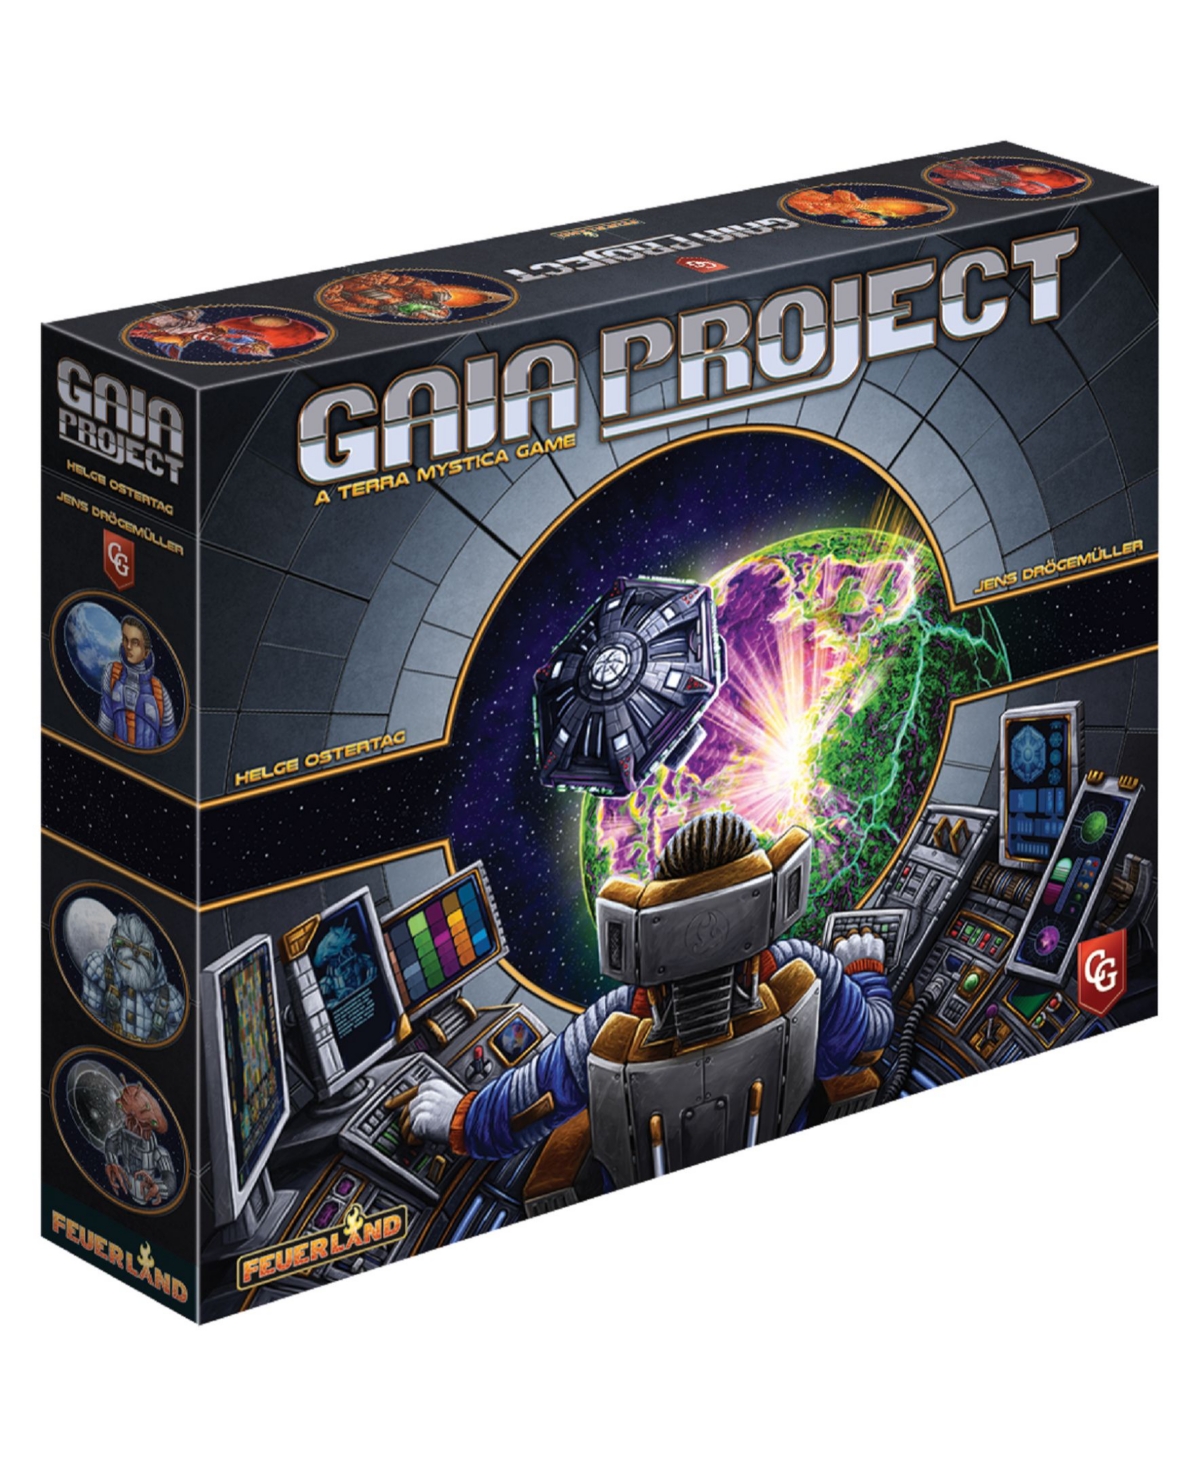 Capstone Games Gaia Project Strategy Board Game, 201 Pieces In Multi